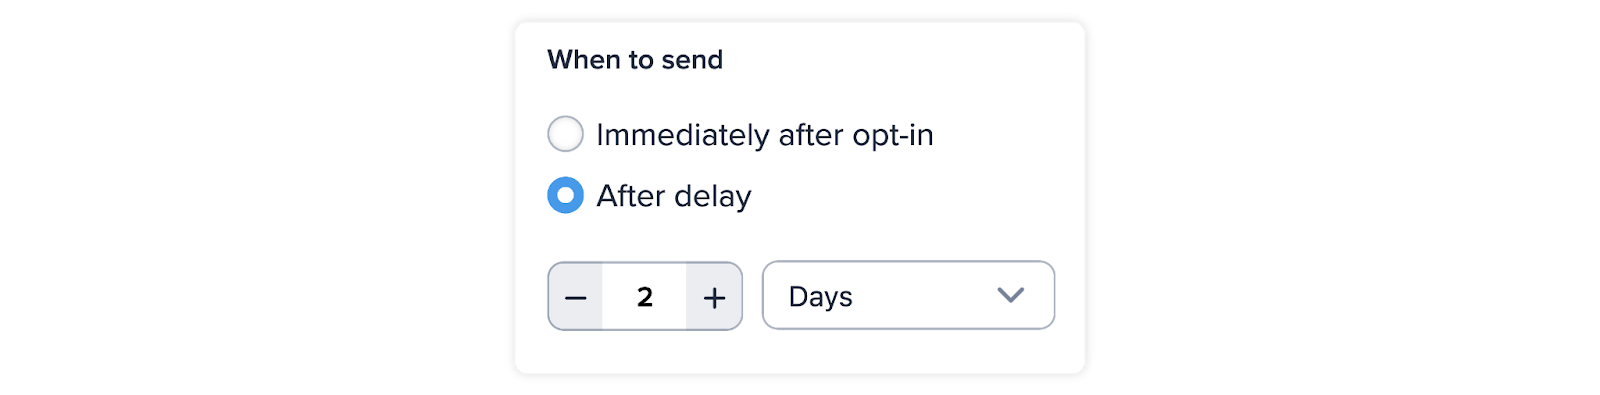 Screenshot of scheduling an autoresponder for a text subscription service